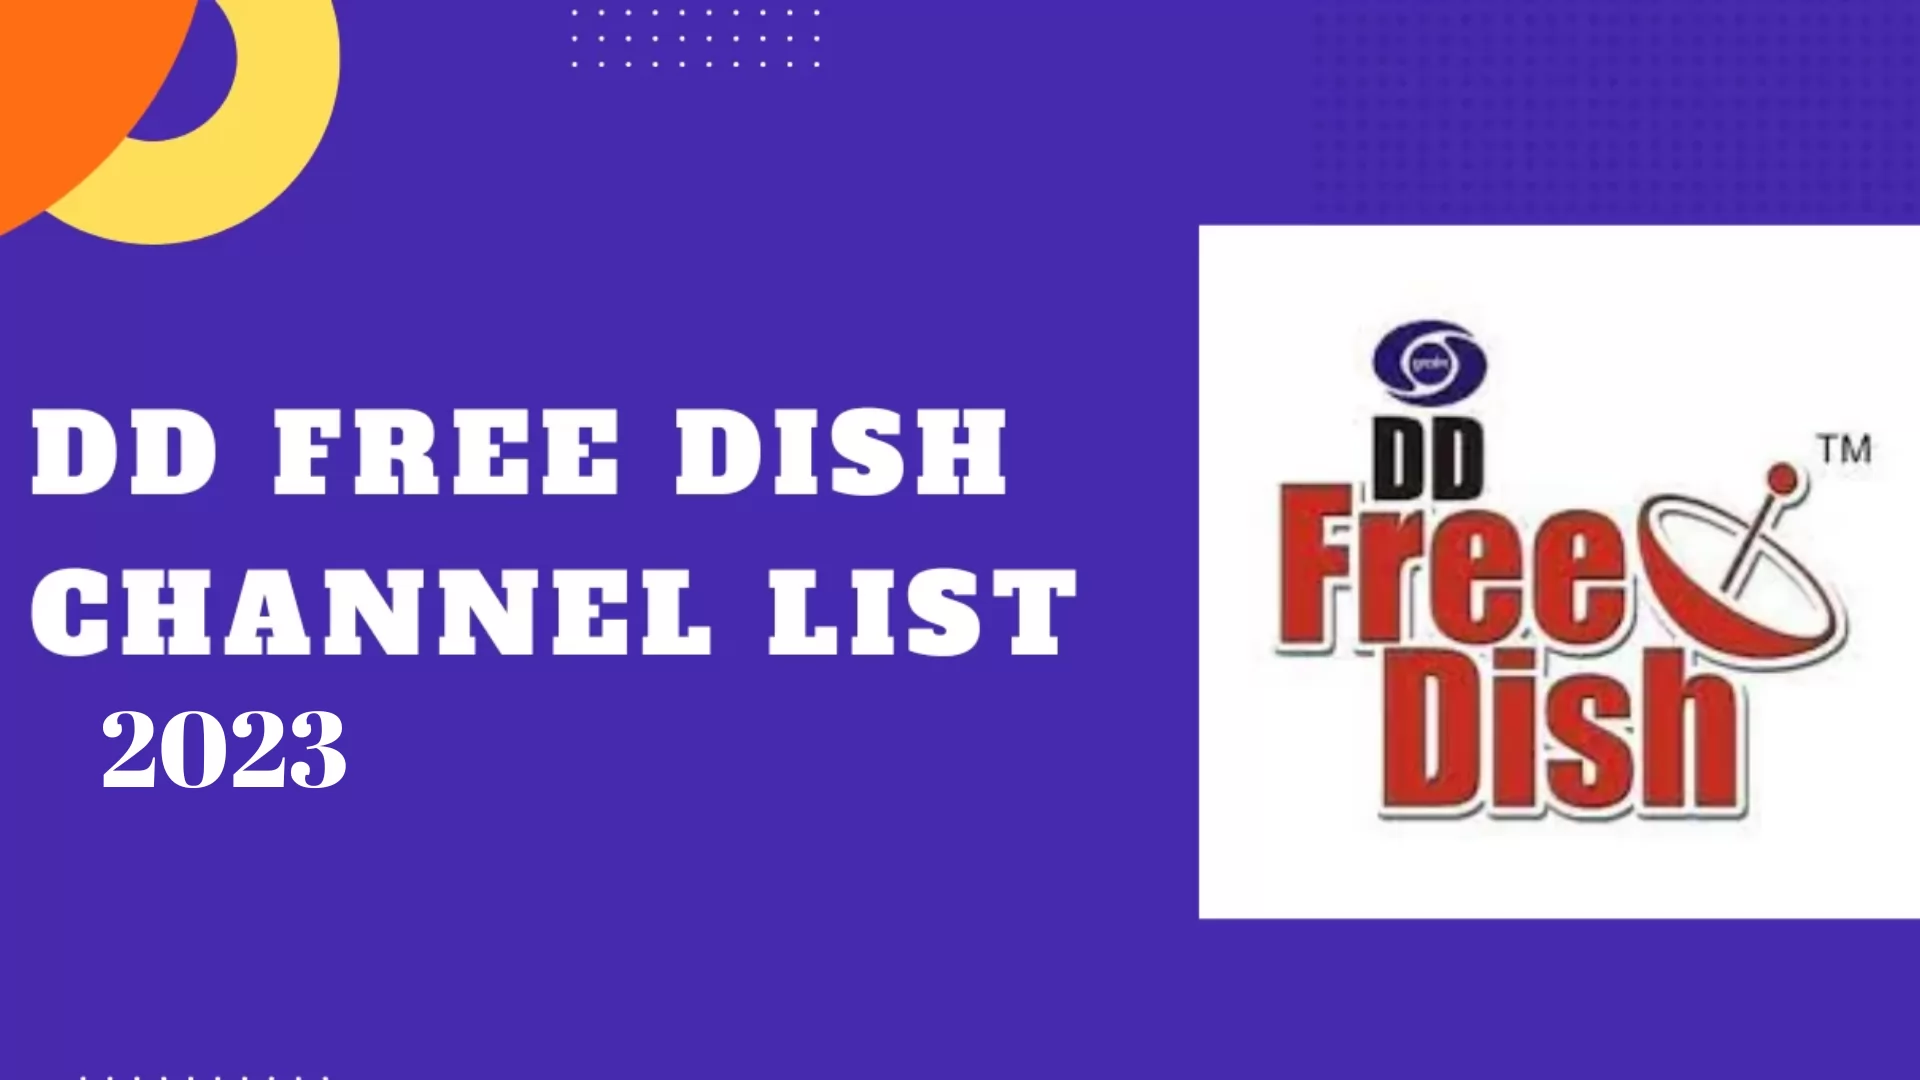 DD Free Dish Channel List 2023: MPEG-2 & MPEG-4